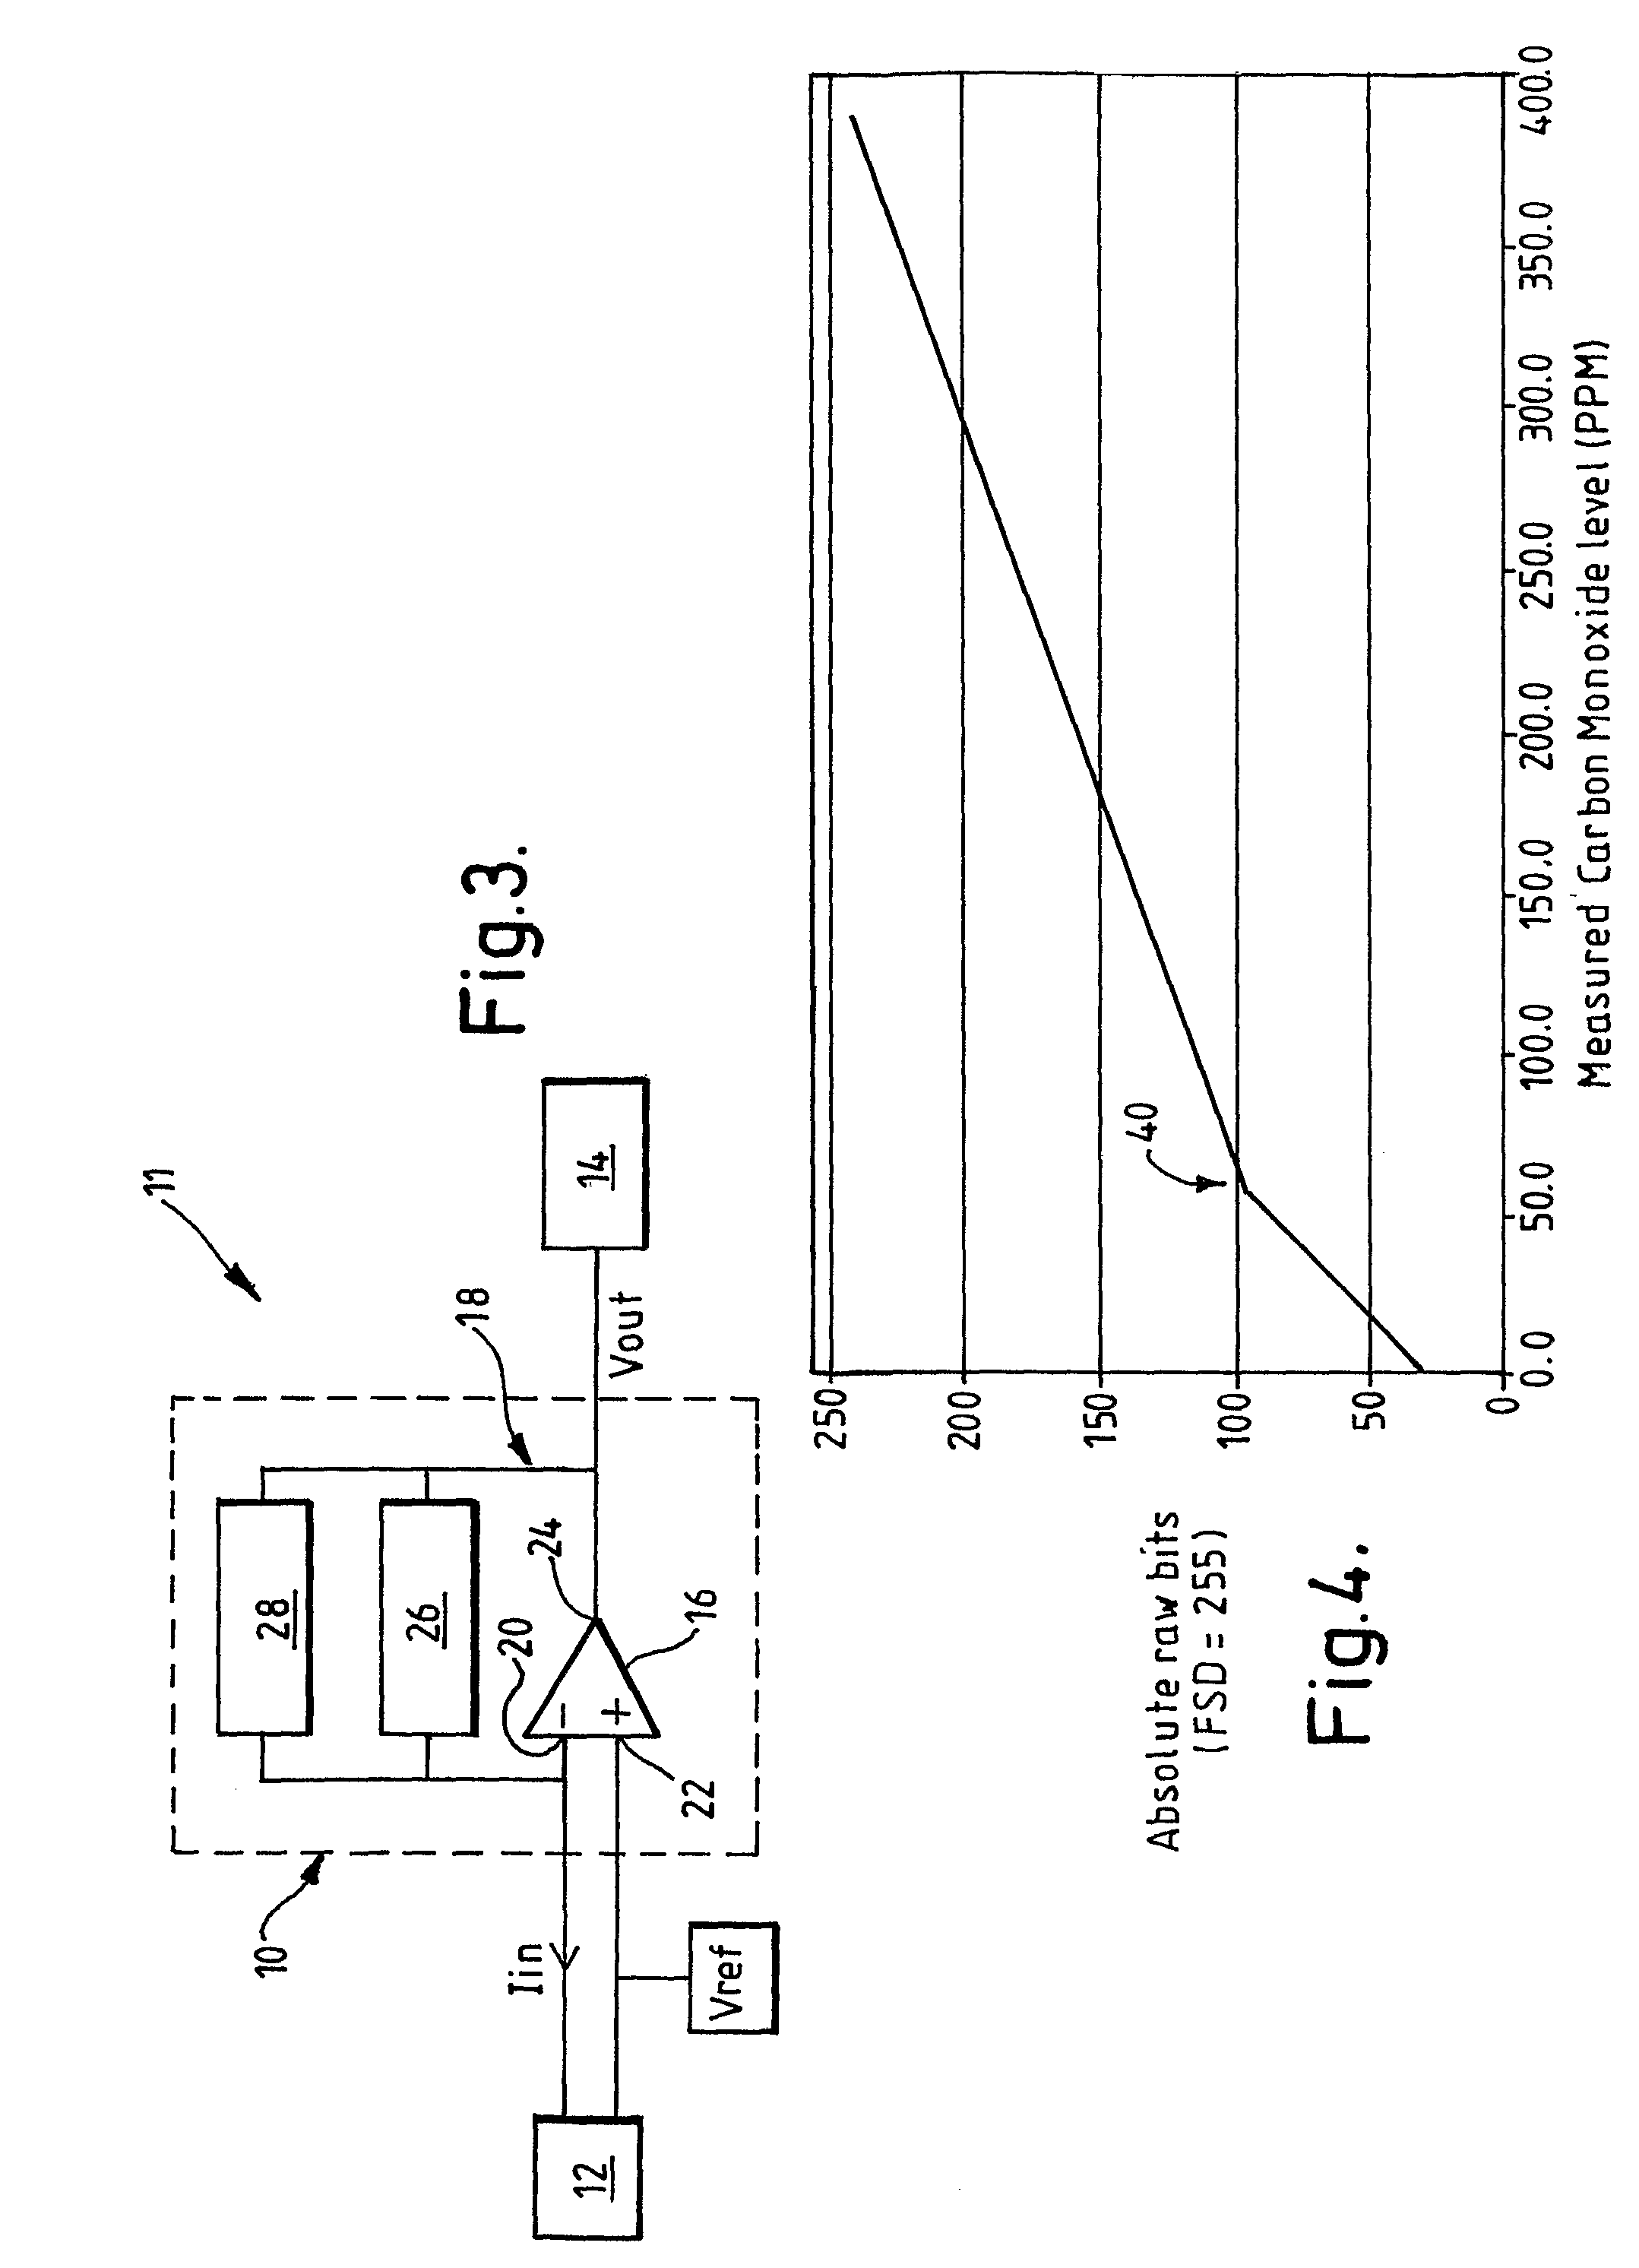 Amplifier for multi-use of single environmental sensor